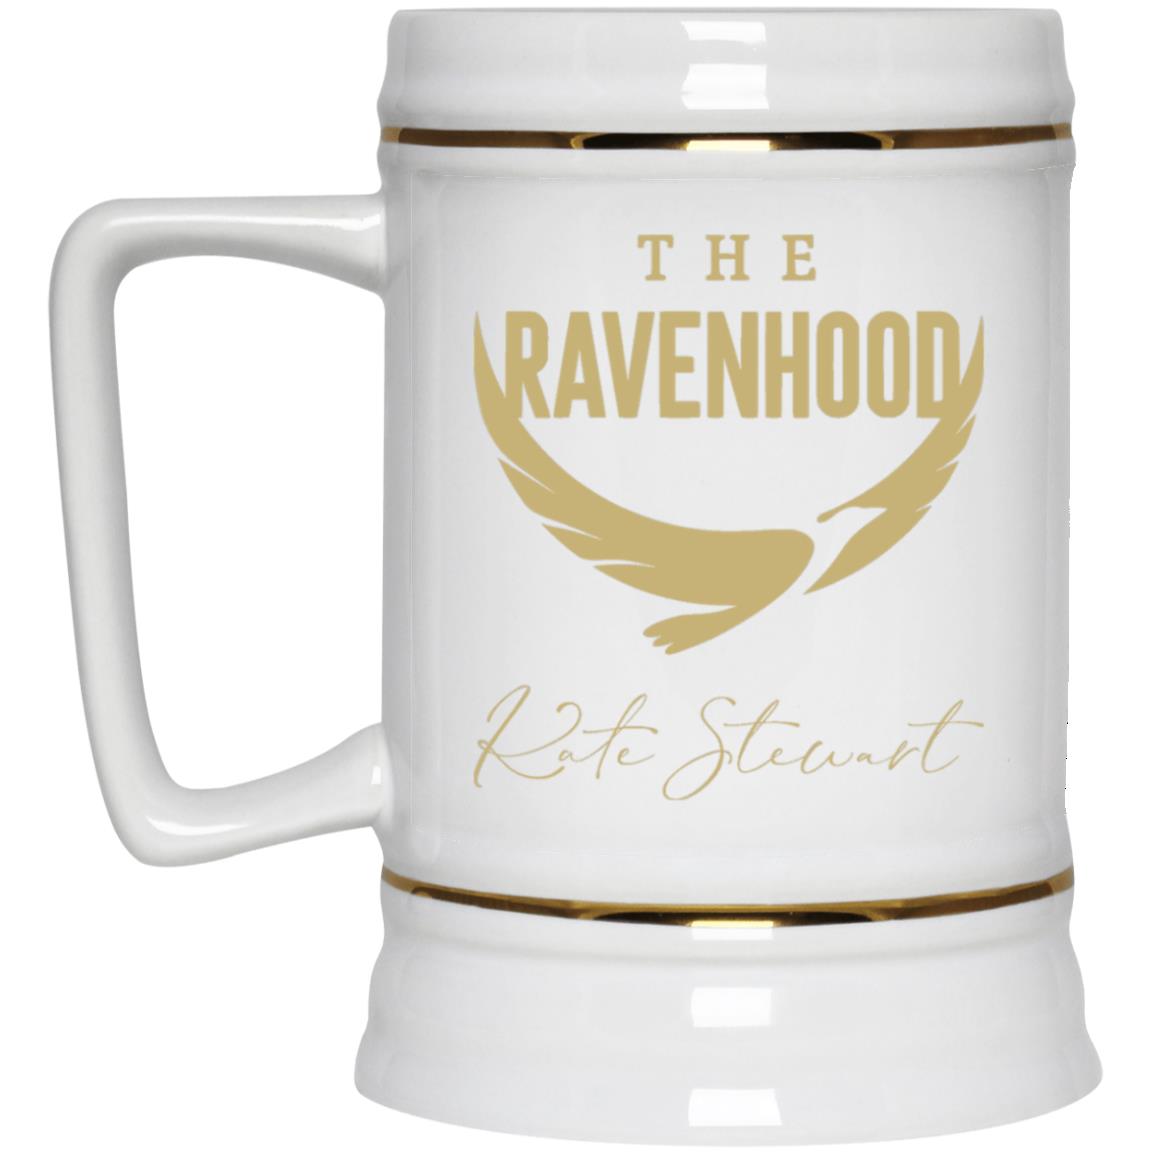 The Ravenhood 12-Pack Cooler